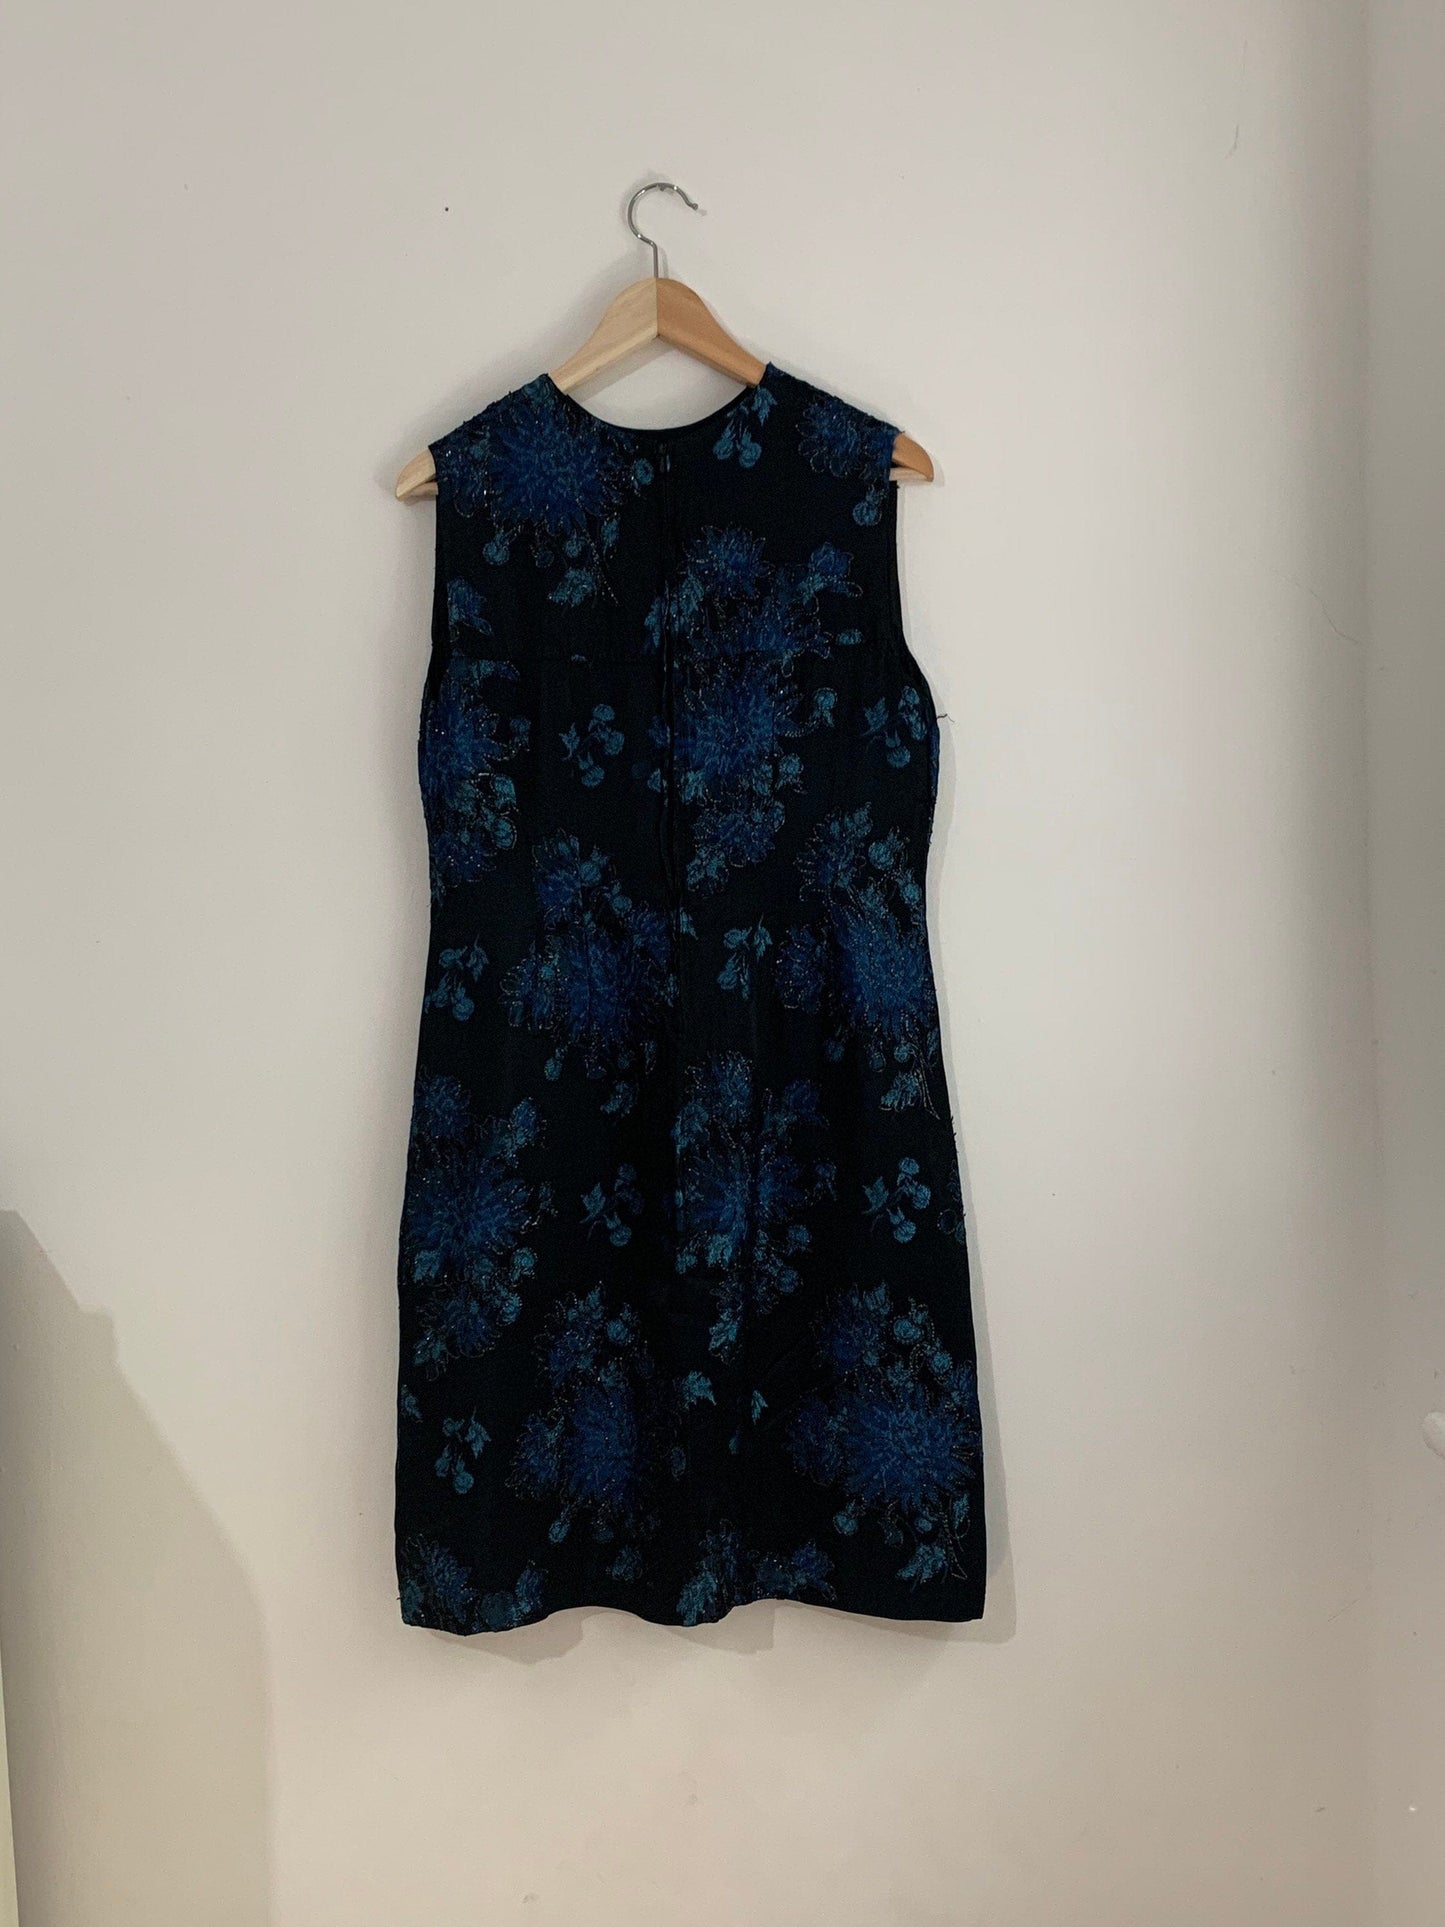 1960s vintage Dress Blue Black sparkle Brocade Floral Mini Dress - Sleeveless Handmade